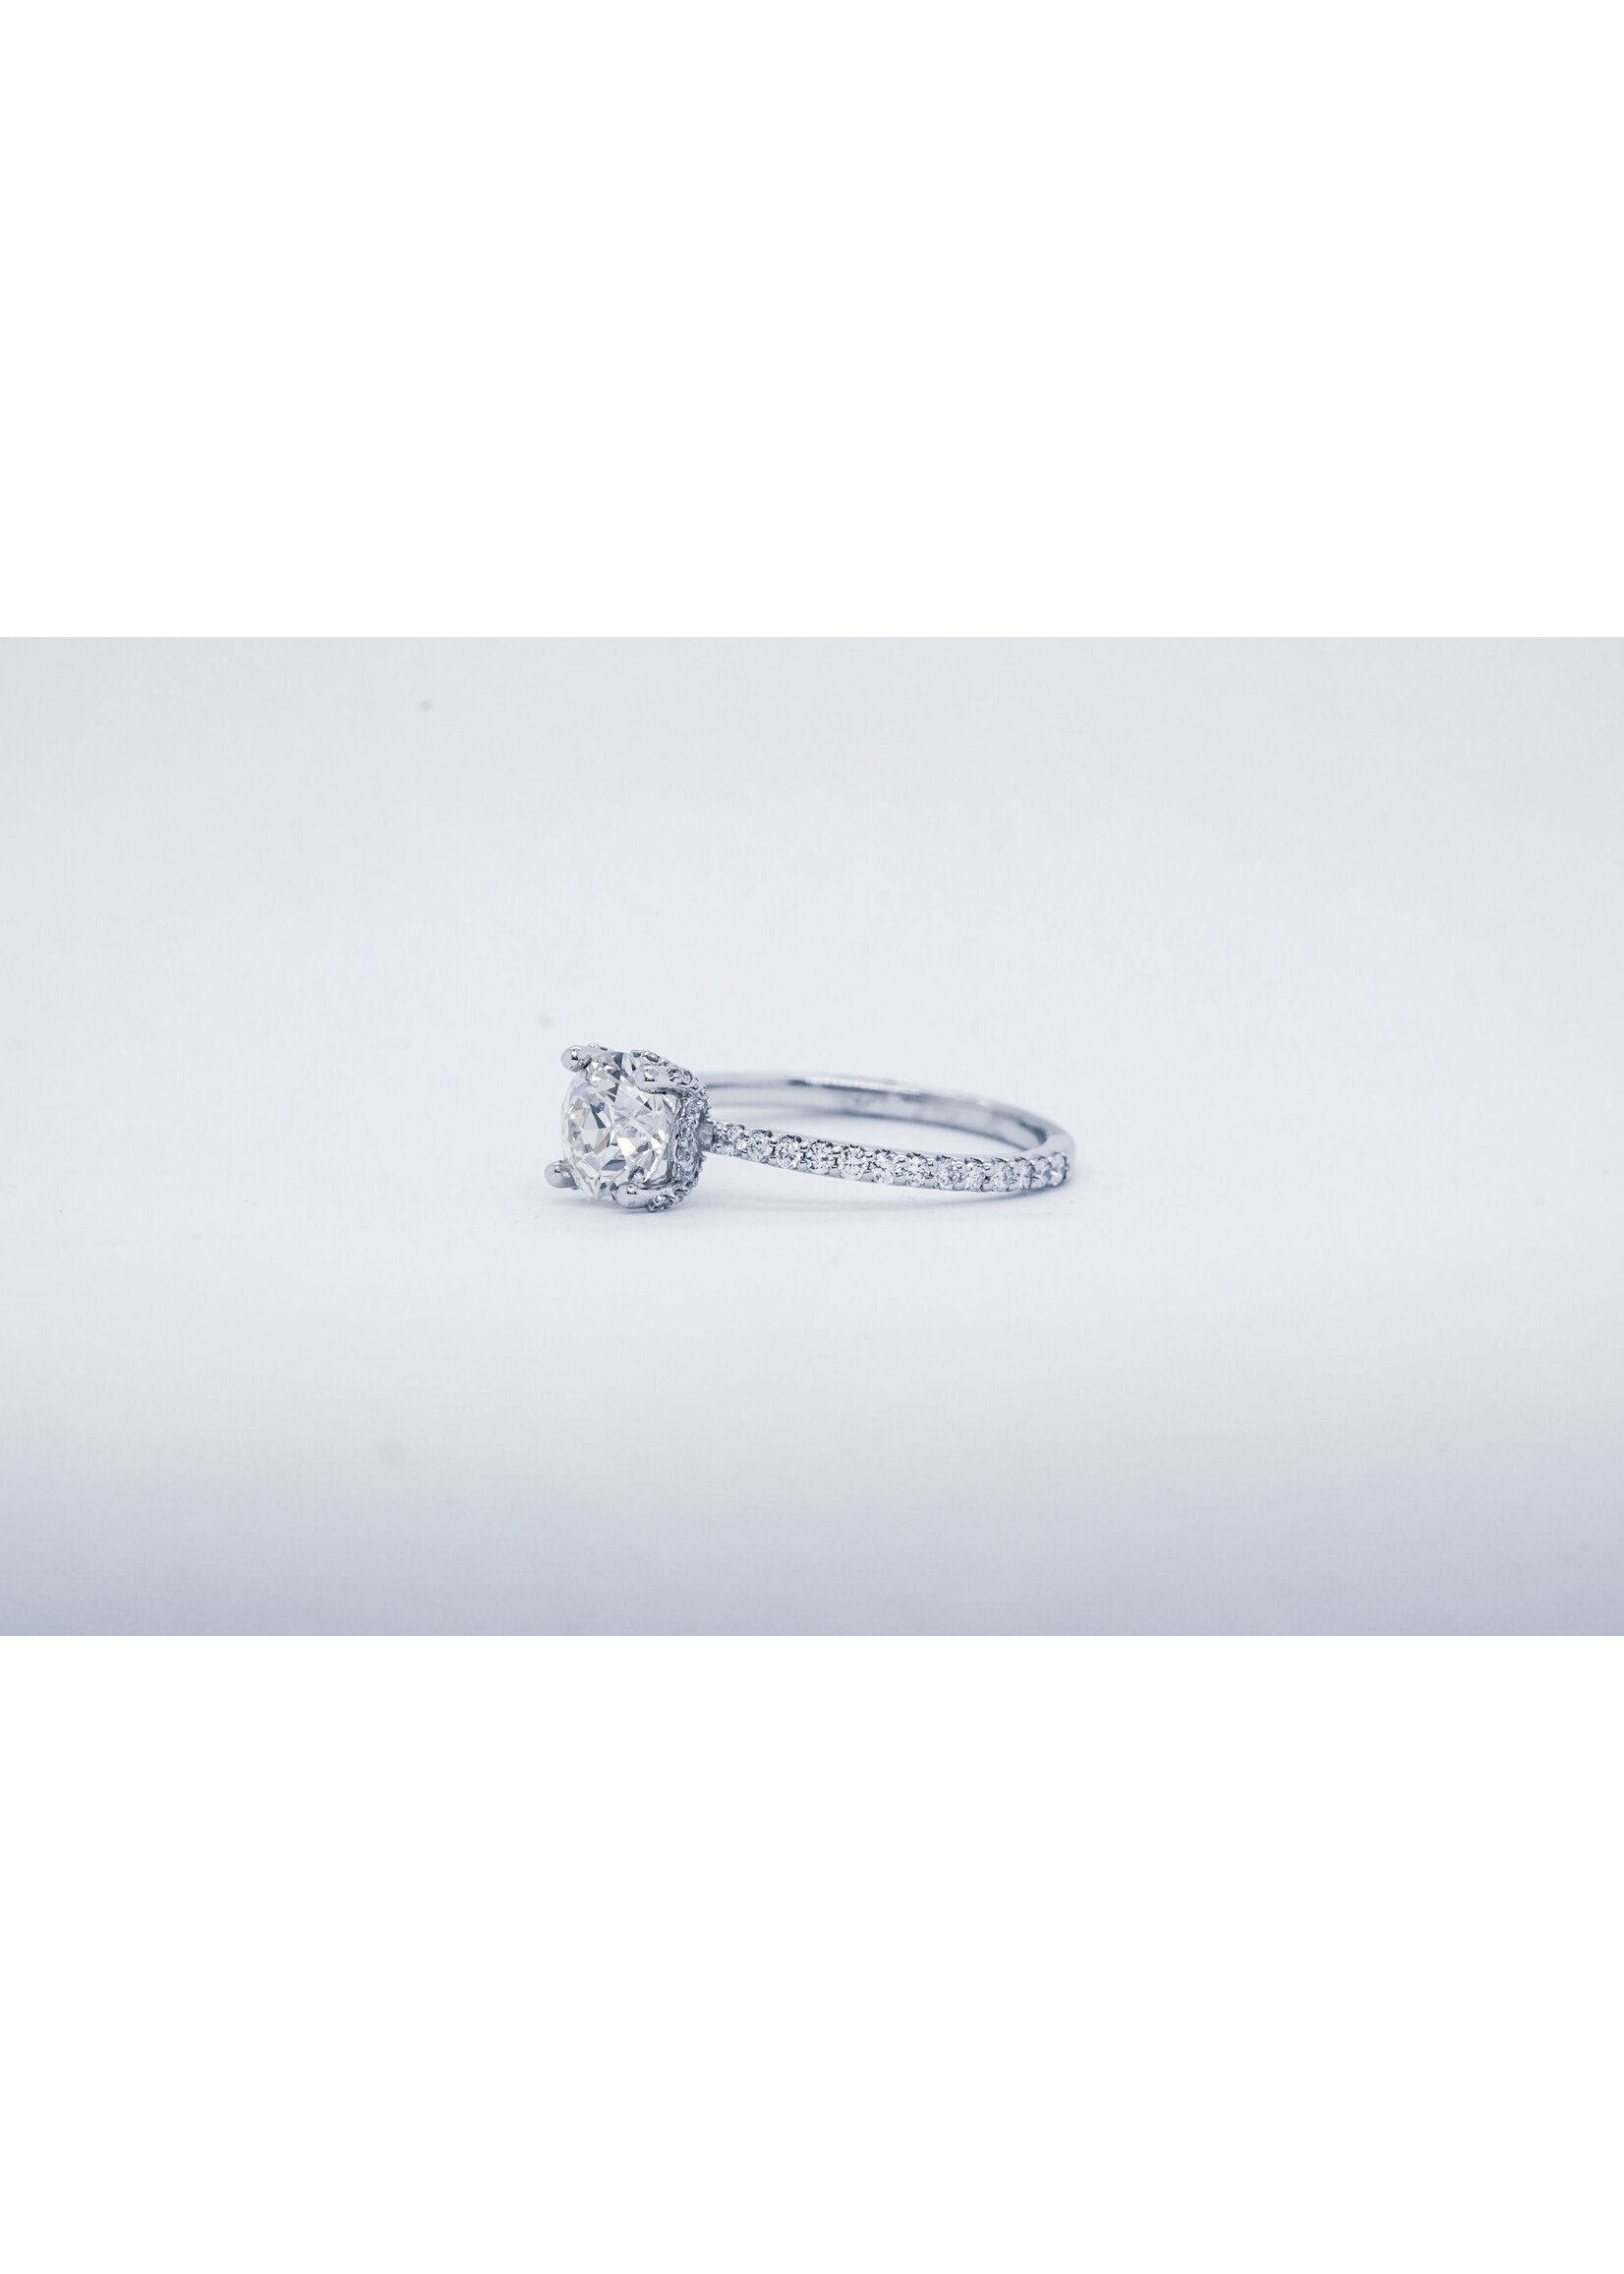 NRET- 14KW 2.15g 1.54ctw (1.20ctr) J/SI1 Old European Diamond Engagement Ring (size 7)